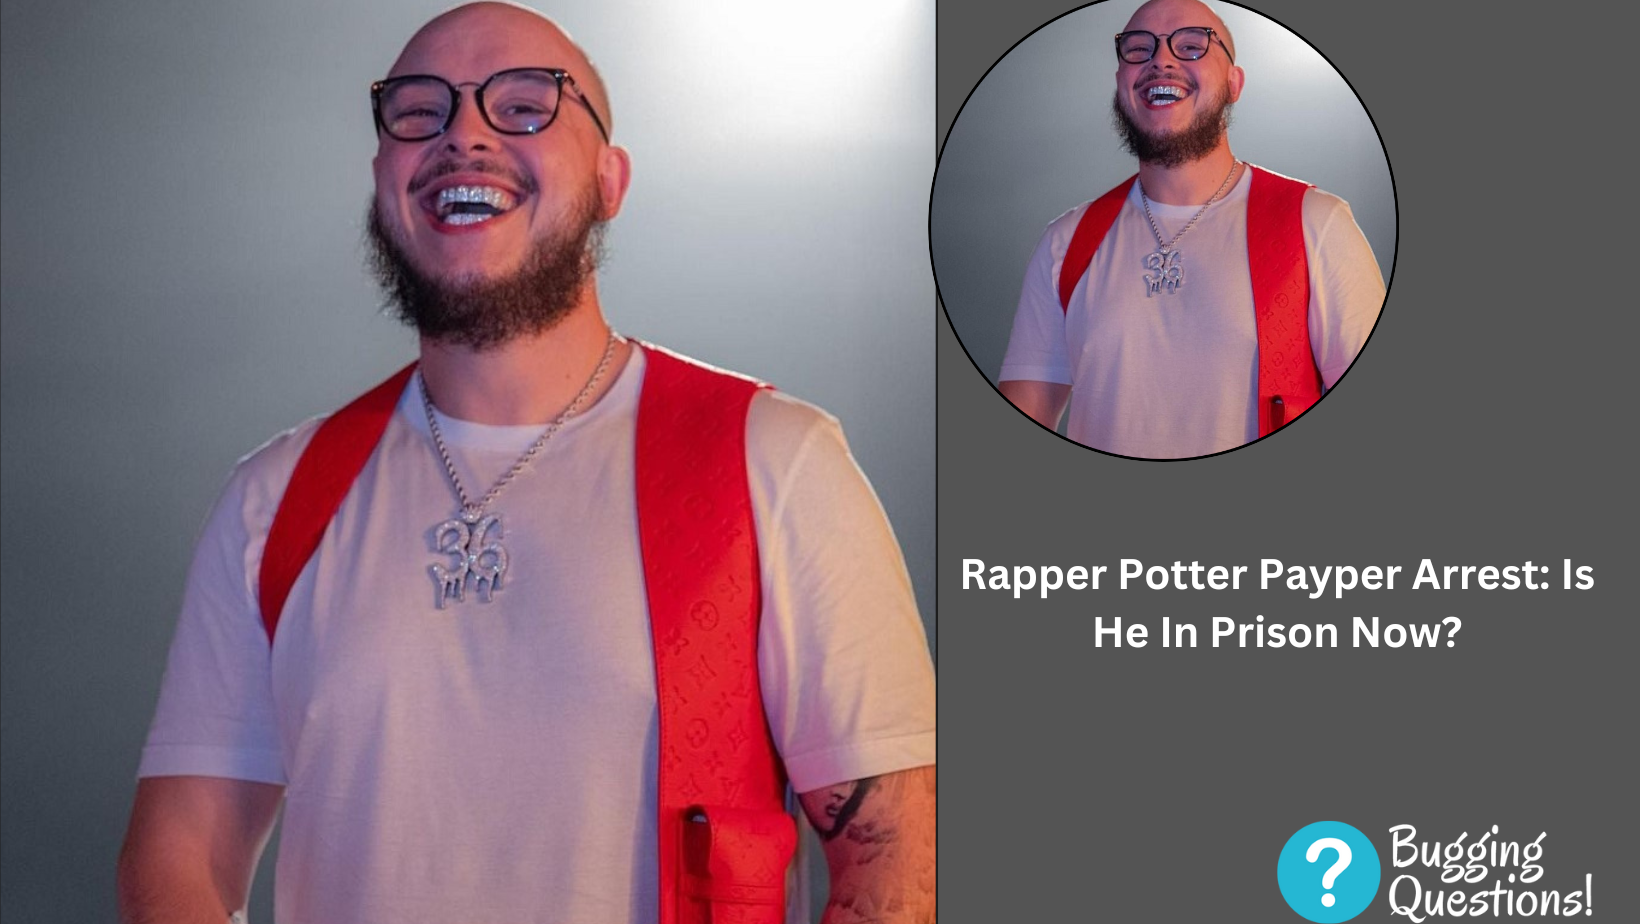 Rapper Potter Payper Arrest: Is He In Prison Now?